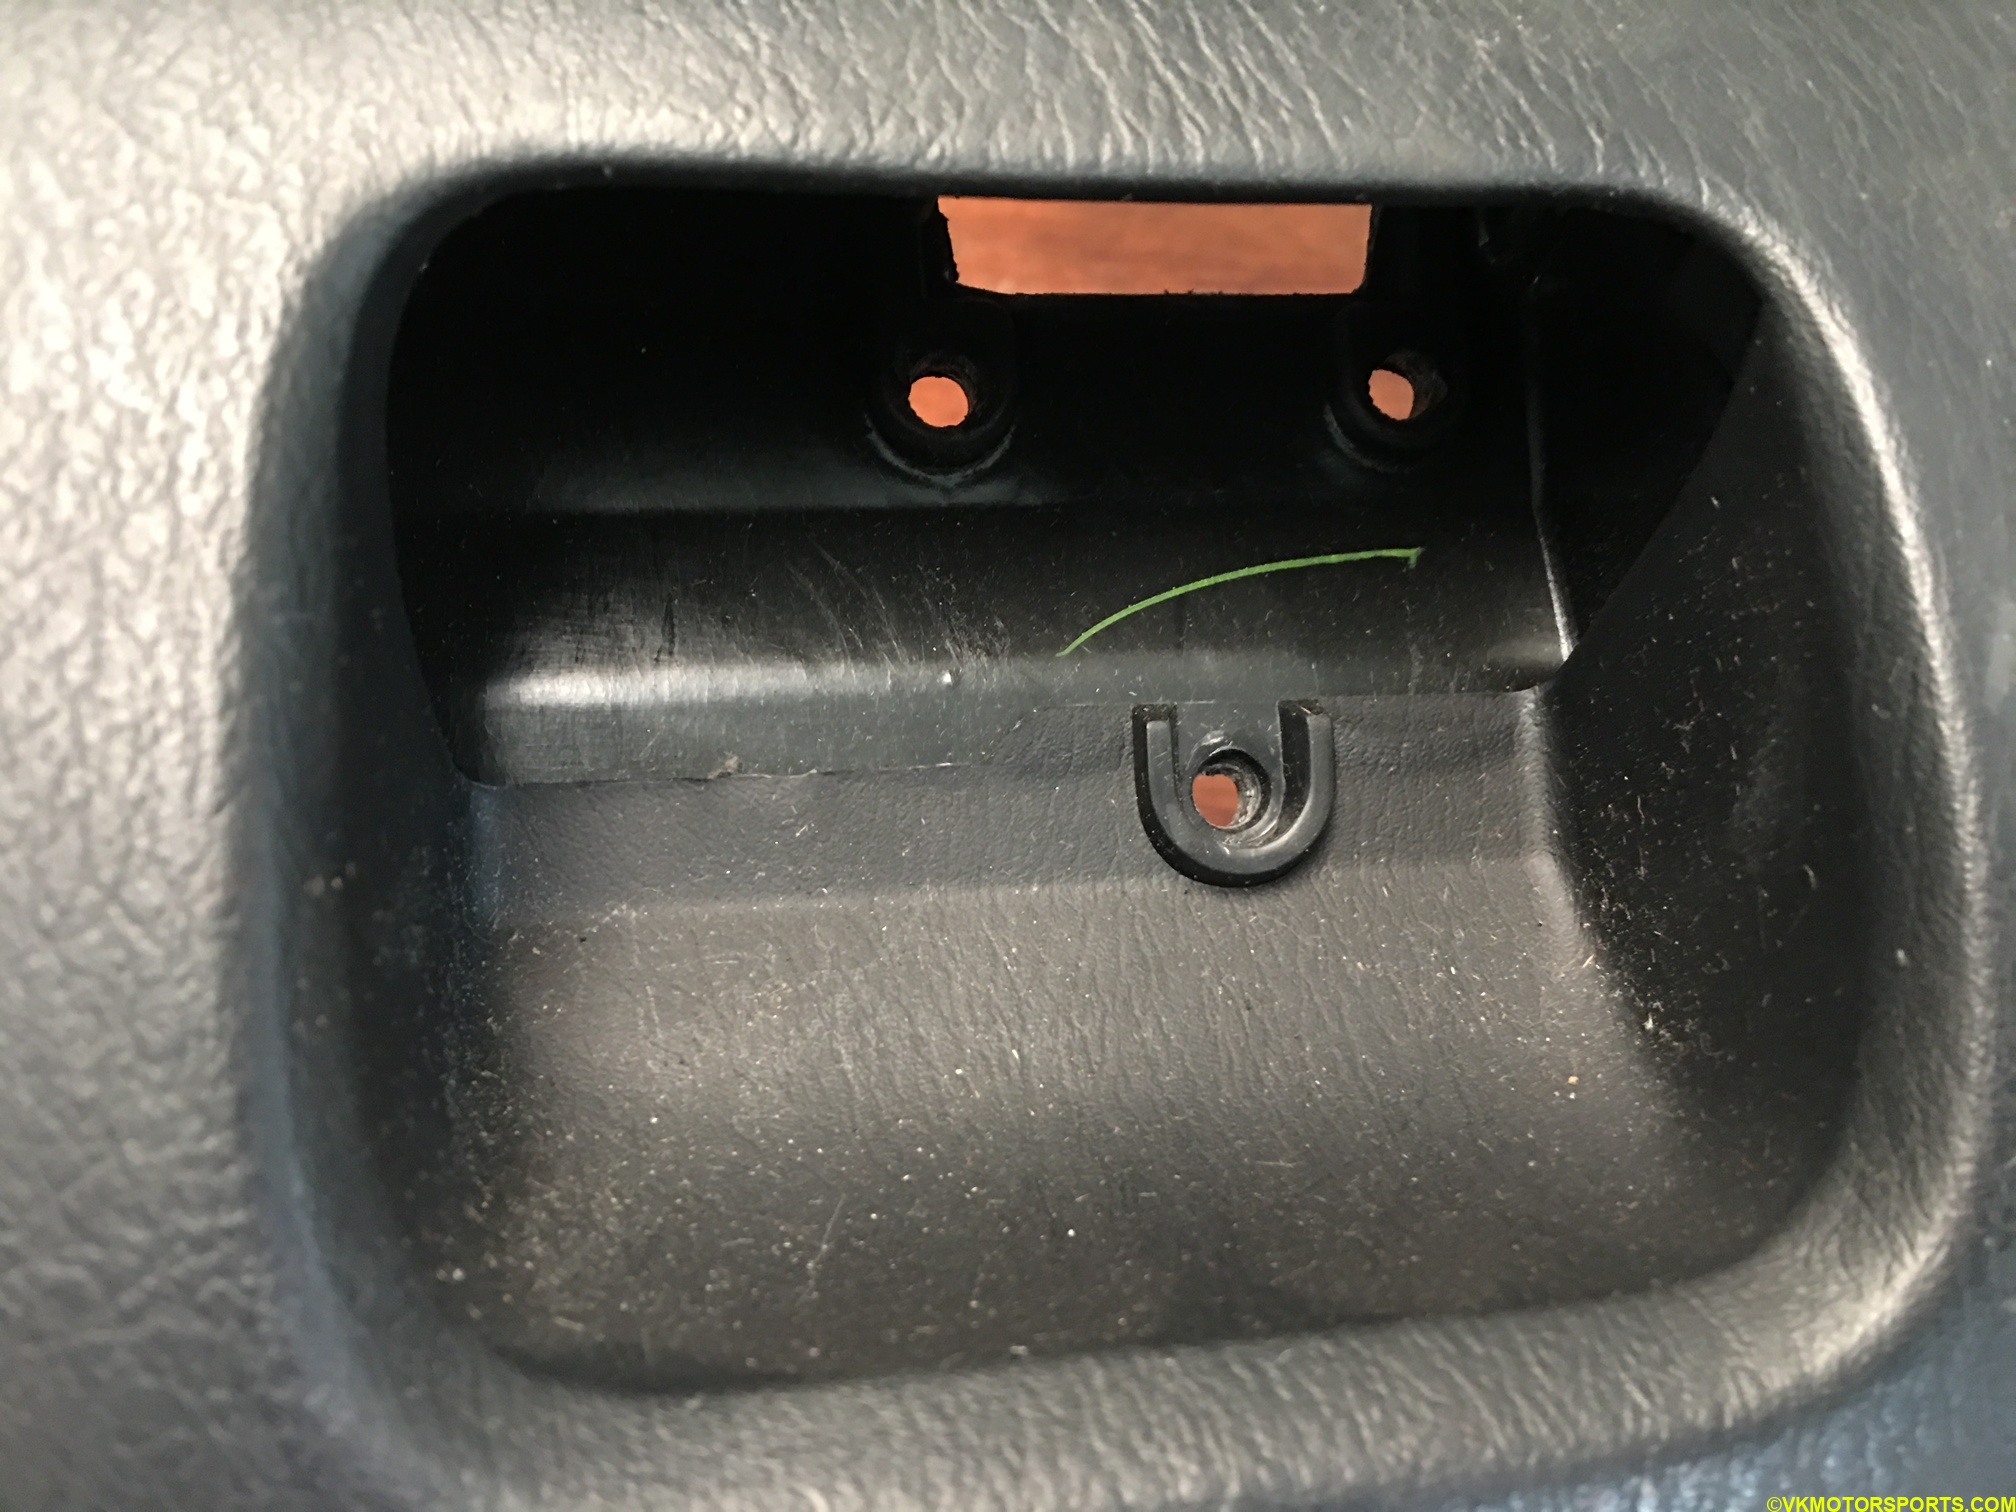 Replacement glove box lock screw holes